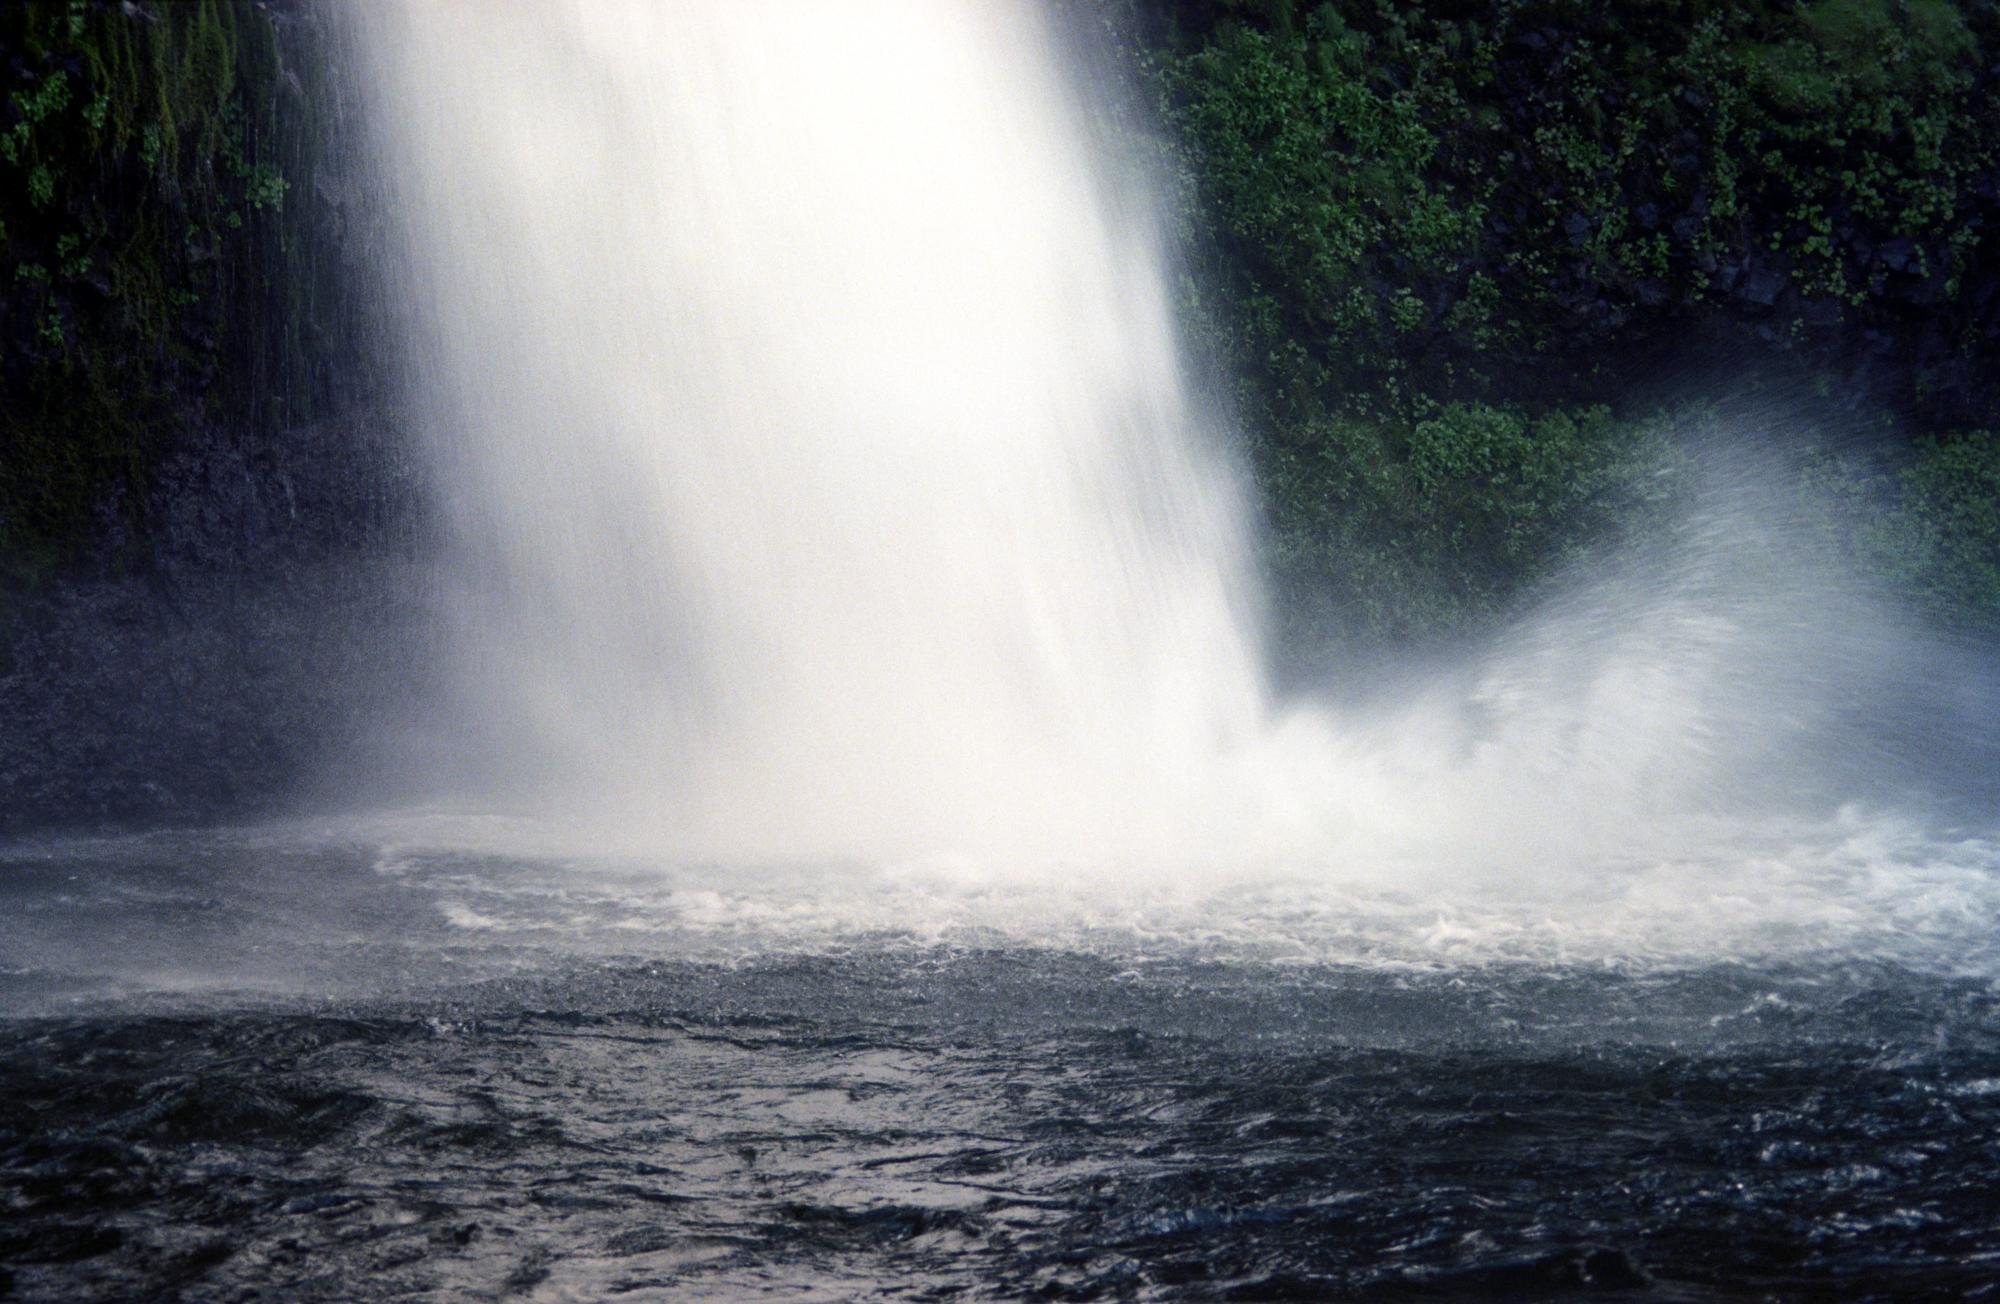 Eastern Washington - Waterfall #2